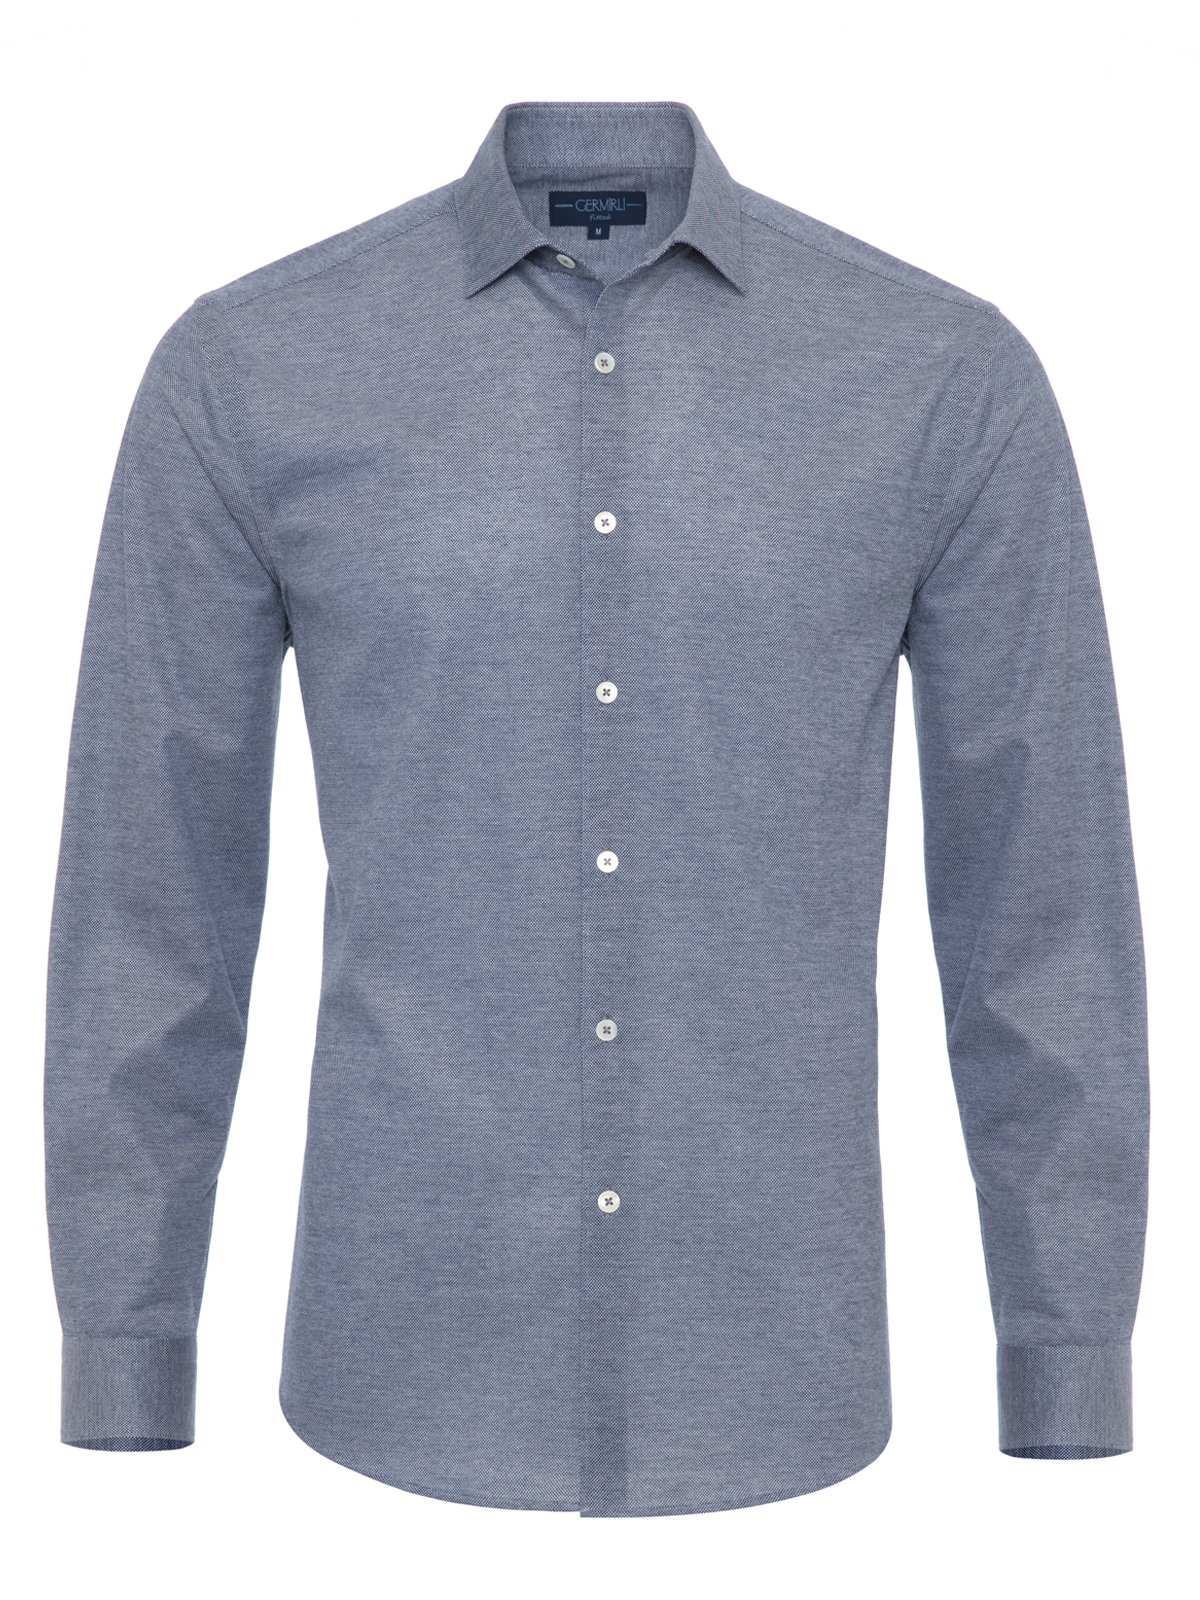 Germirli - Germirli Navy Soft Collar Jersey Tailor Fit Shirt